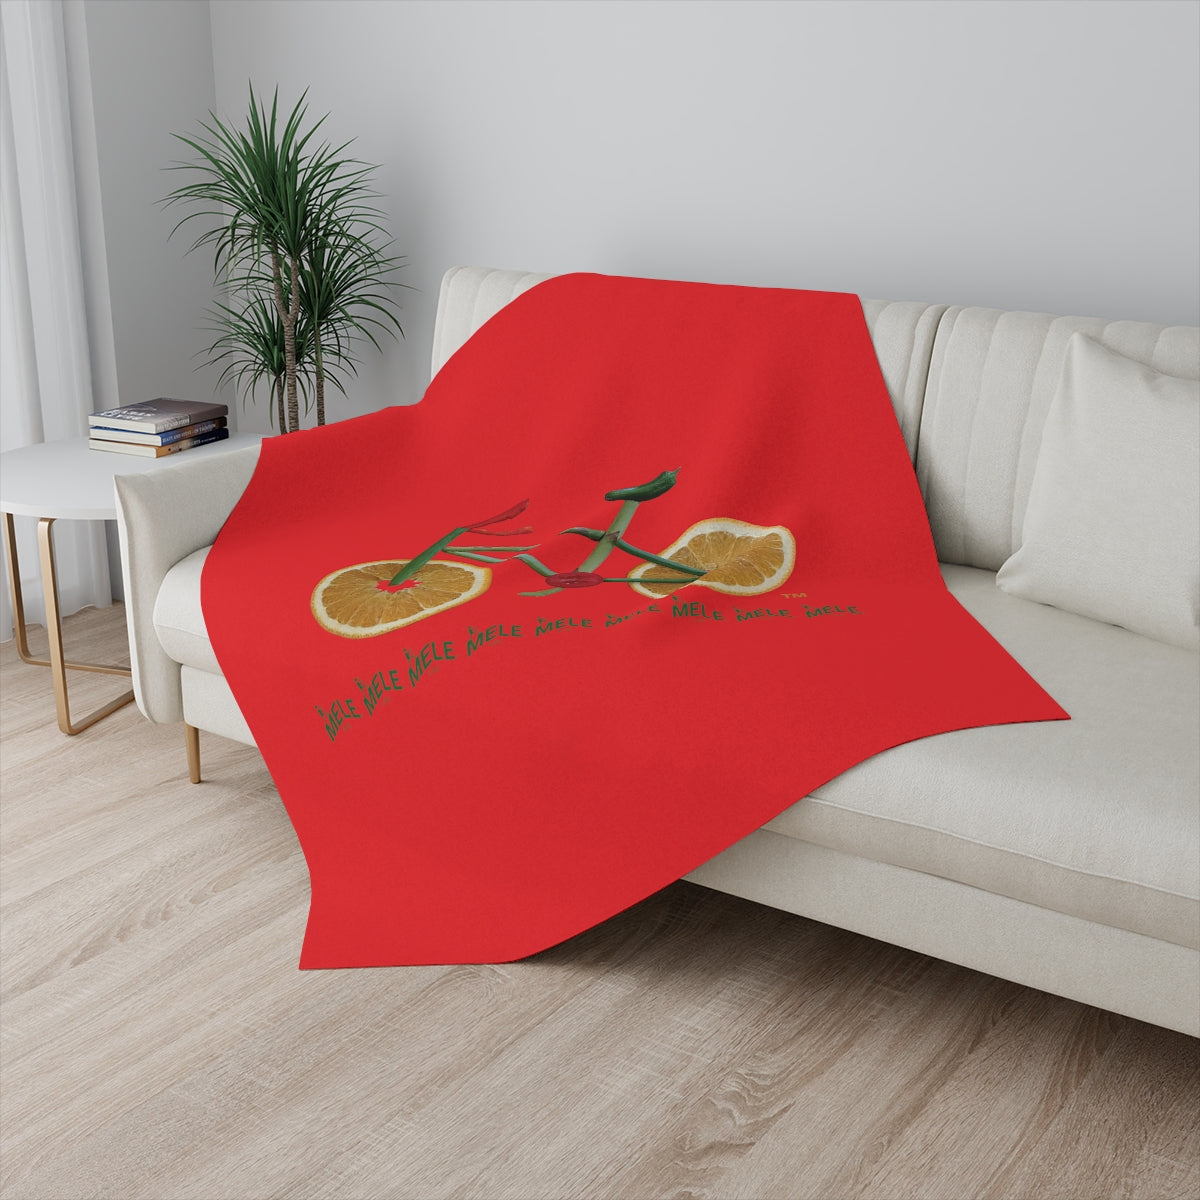 Blanket - Veggie Bike   (red)